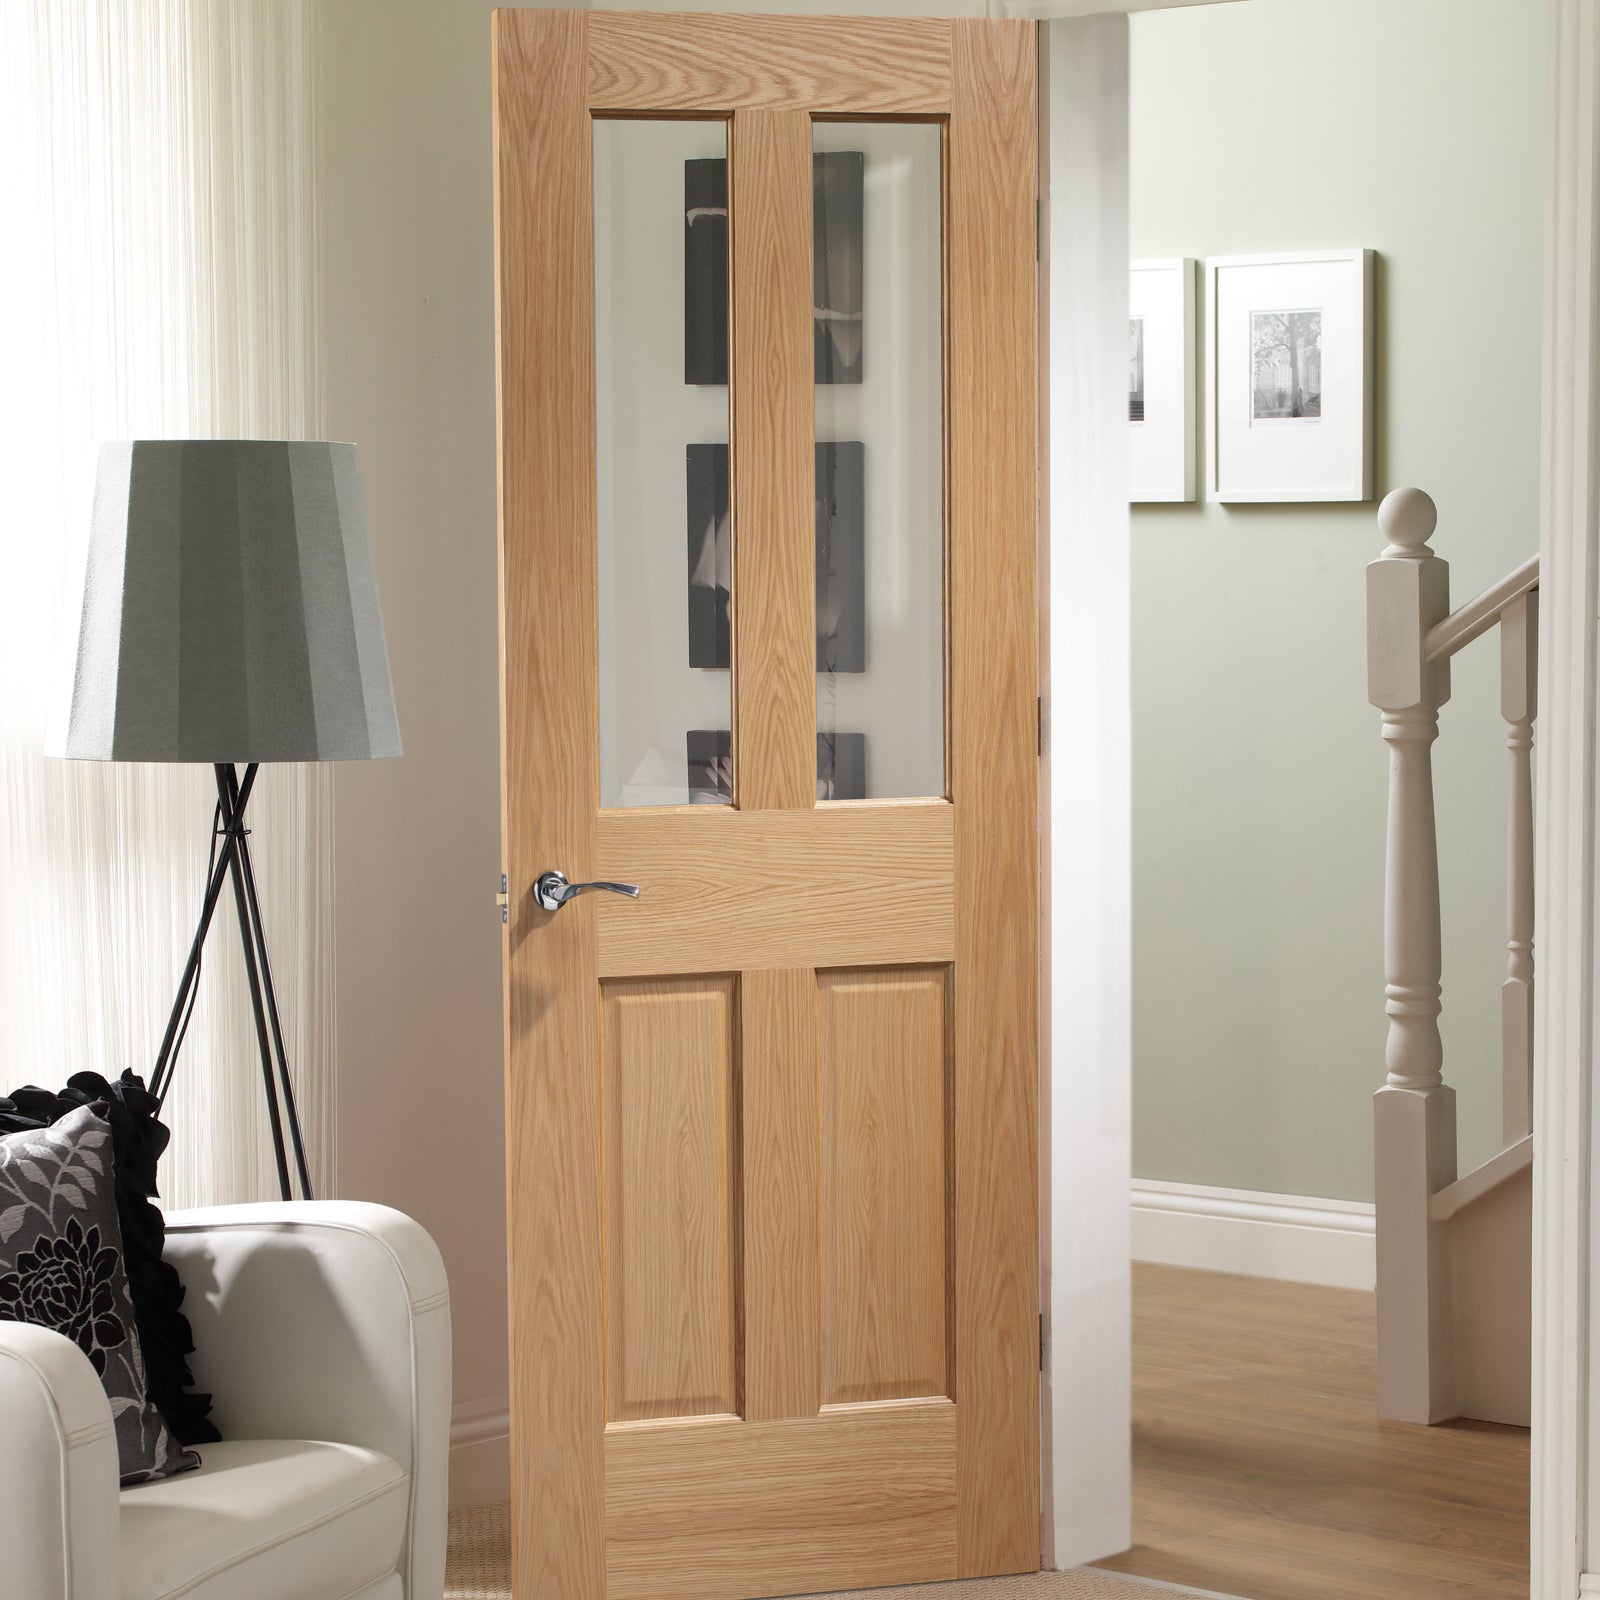 SHOW Internal Oak Malton Fire Door with Clear Glass lifestyle